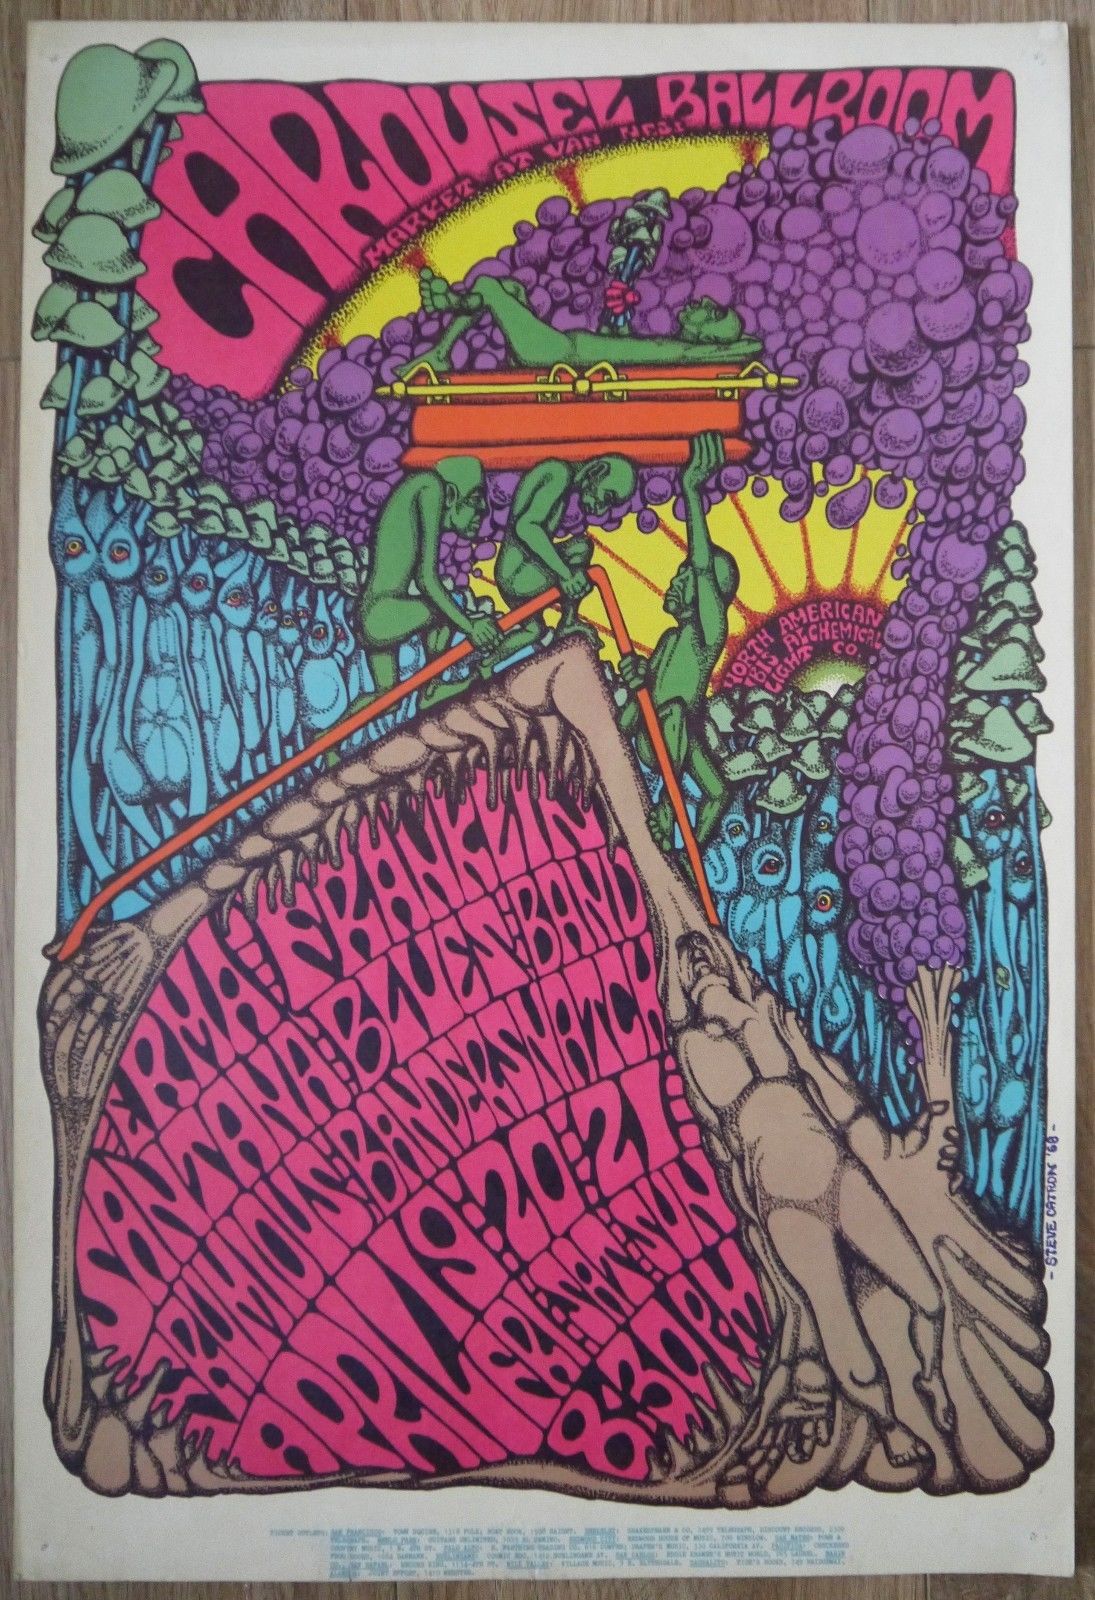 Santana. Super rare original 1968 San Francisco Concerts Poster. VG+.